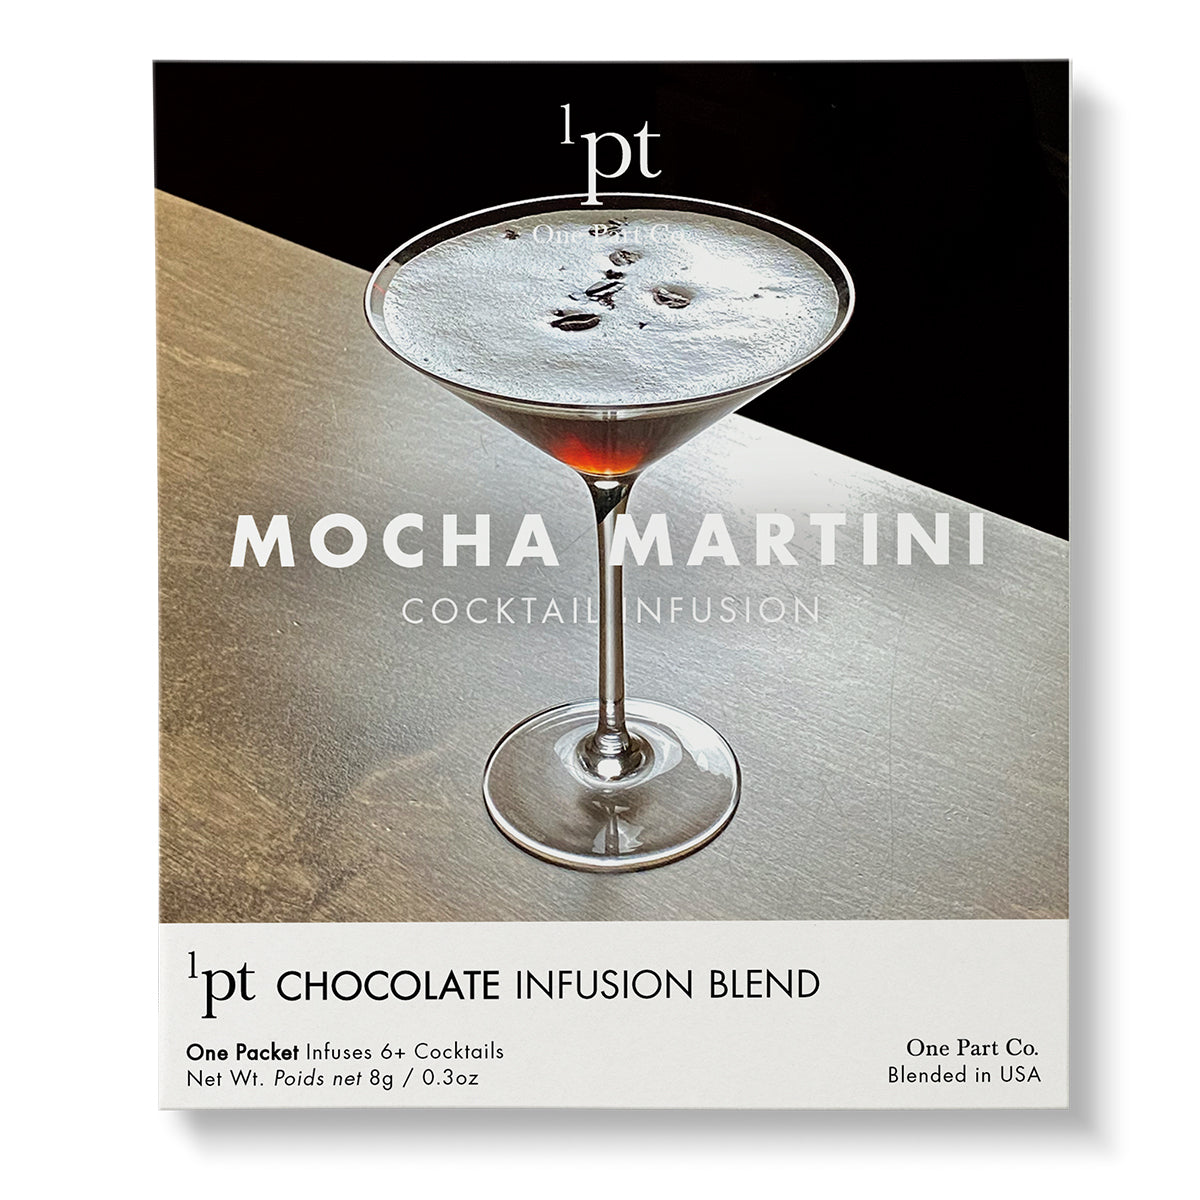 Espresso Martini Party Starter Cocktail Kit